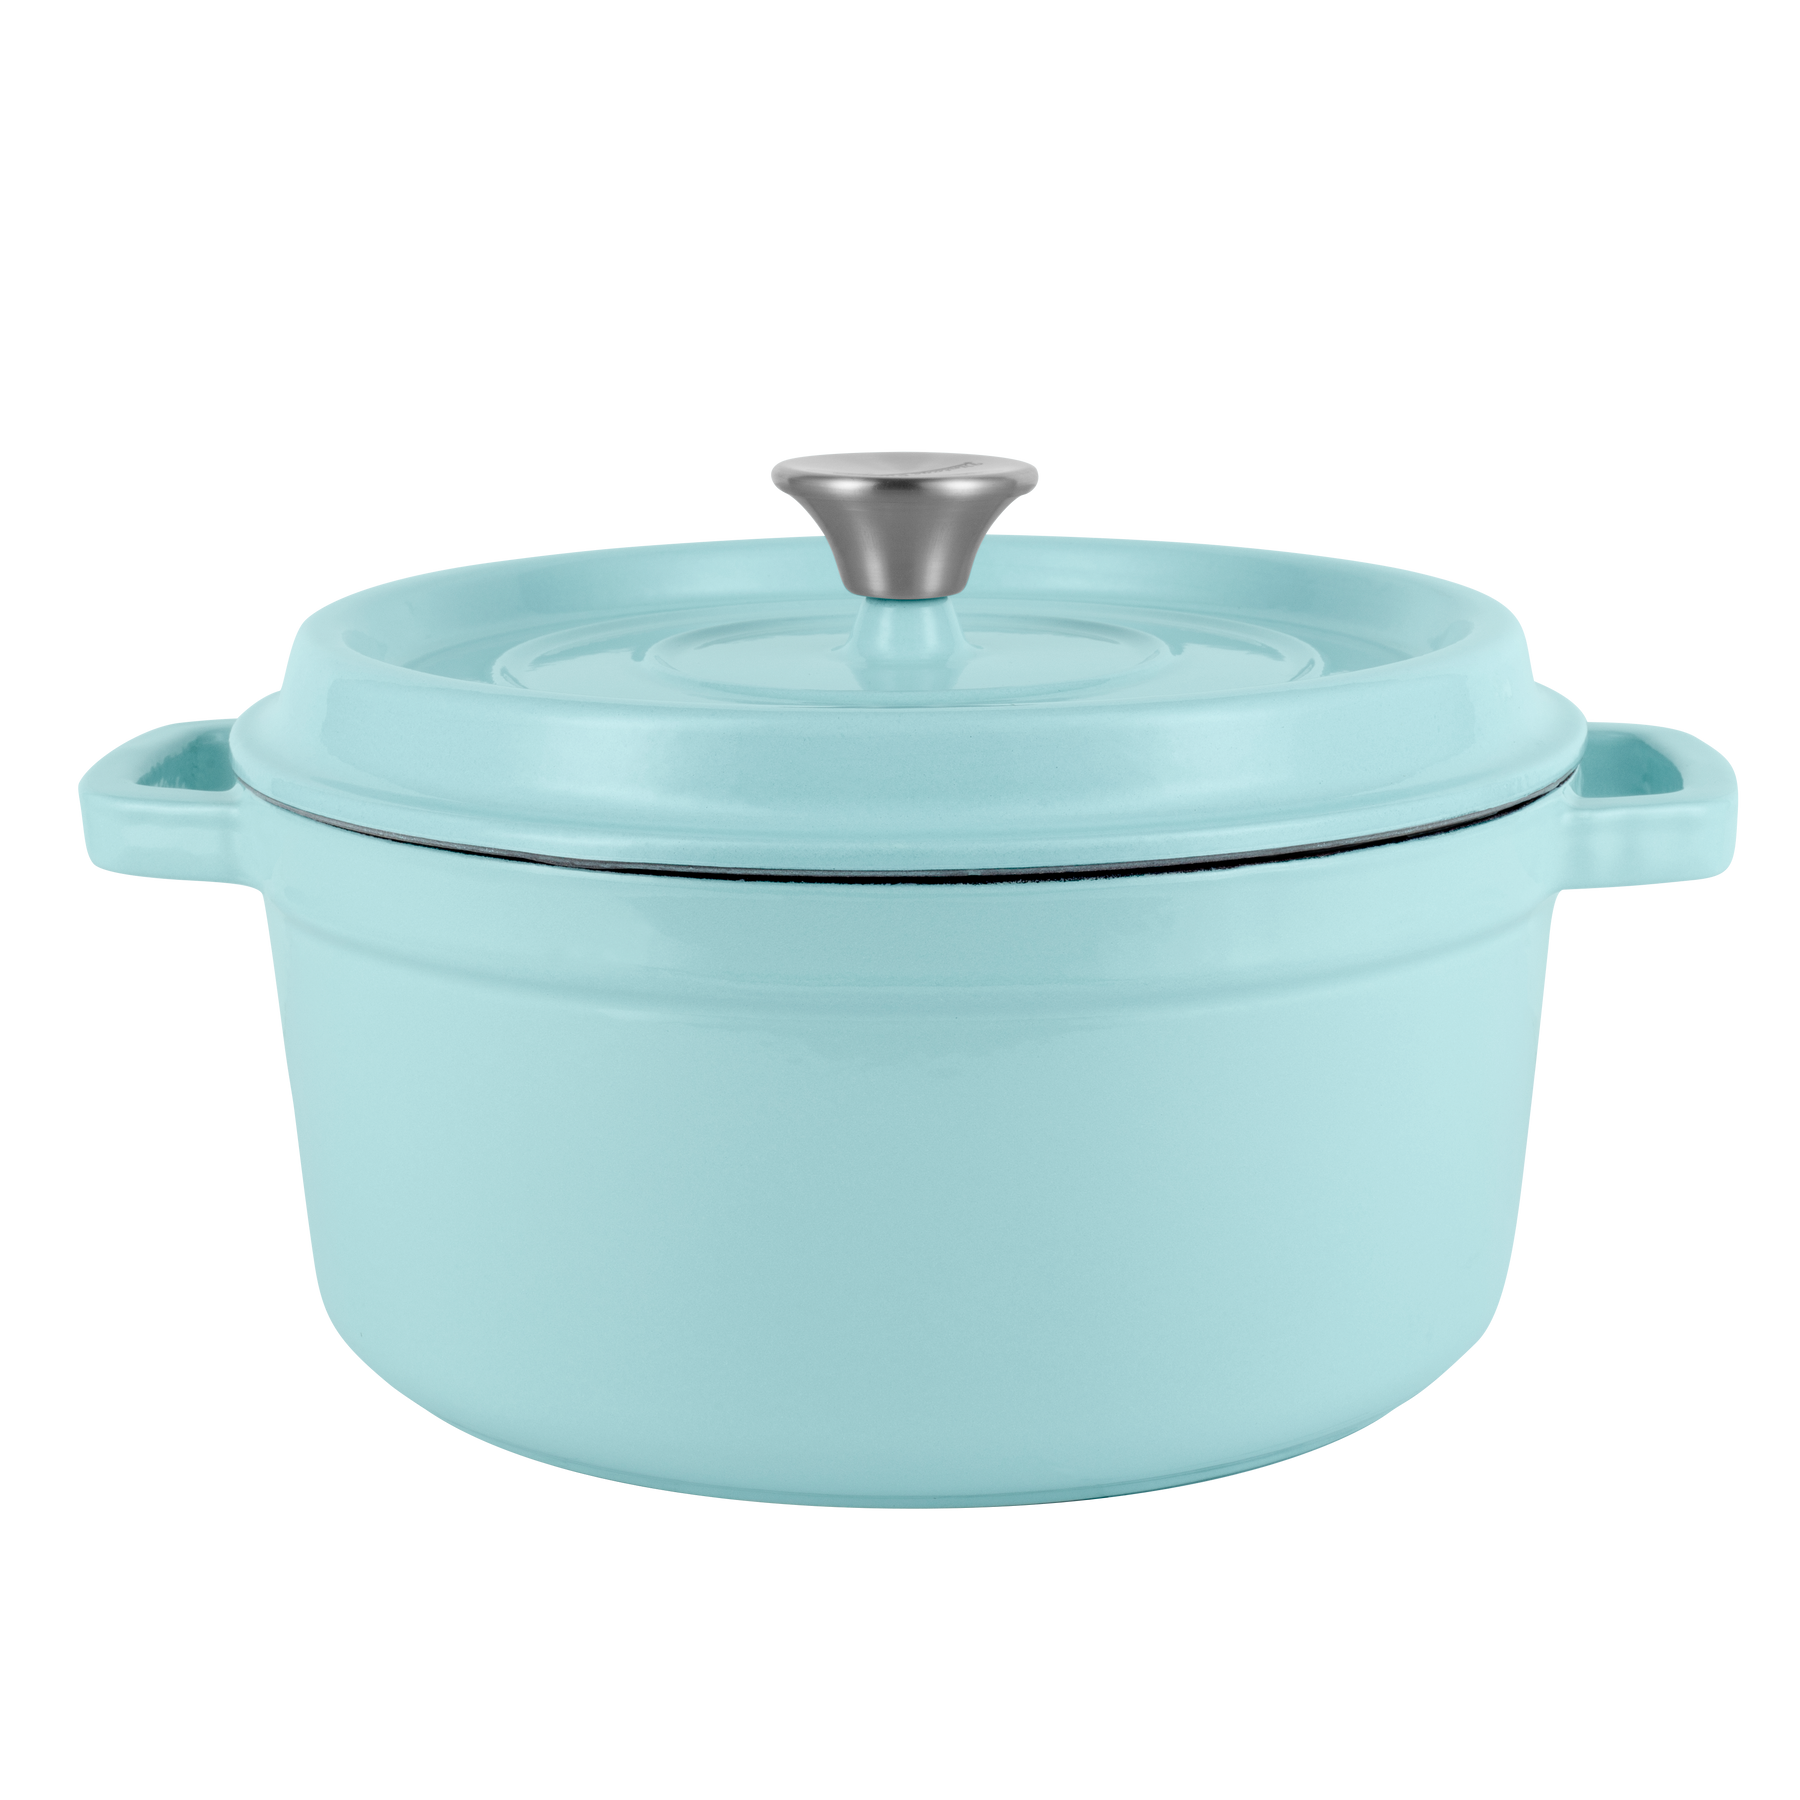 Enemeled cast iron pot with lid 2,2L by Vintage Cuisine